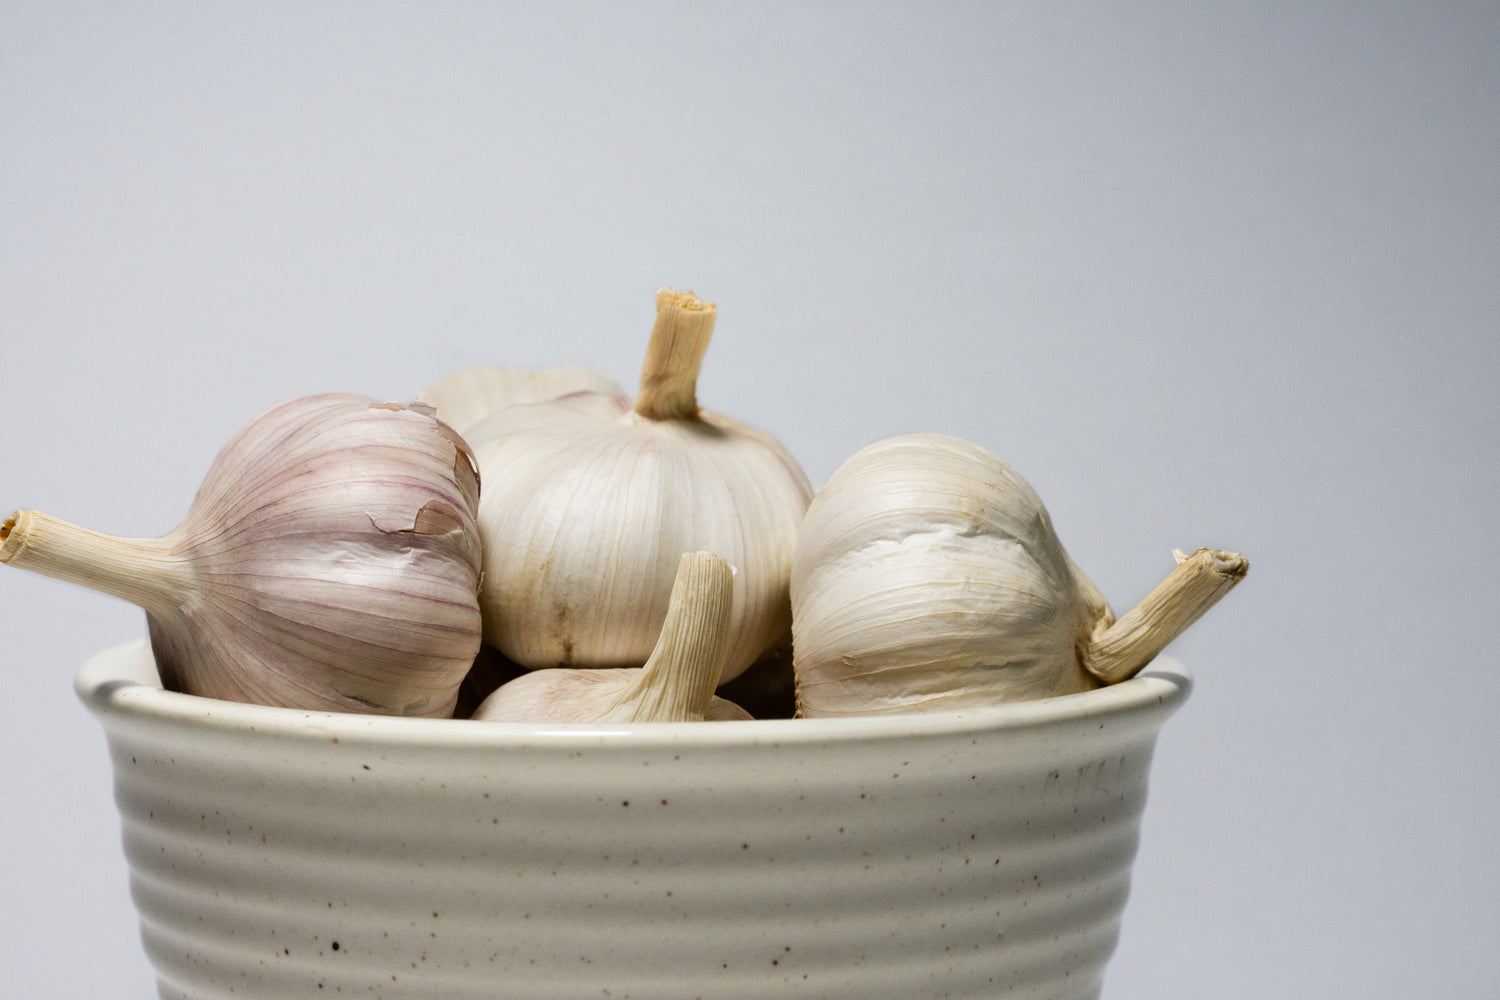 Nathan guner kinesiology homepage - garlic bulbs in a bowl - natural medicine